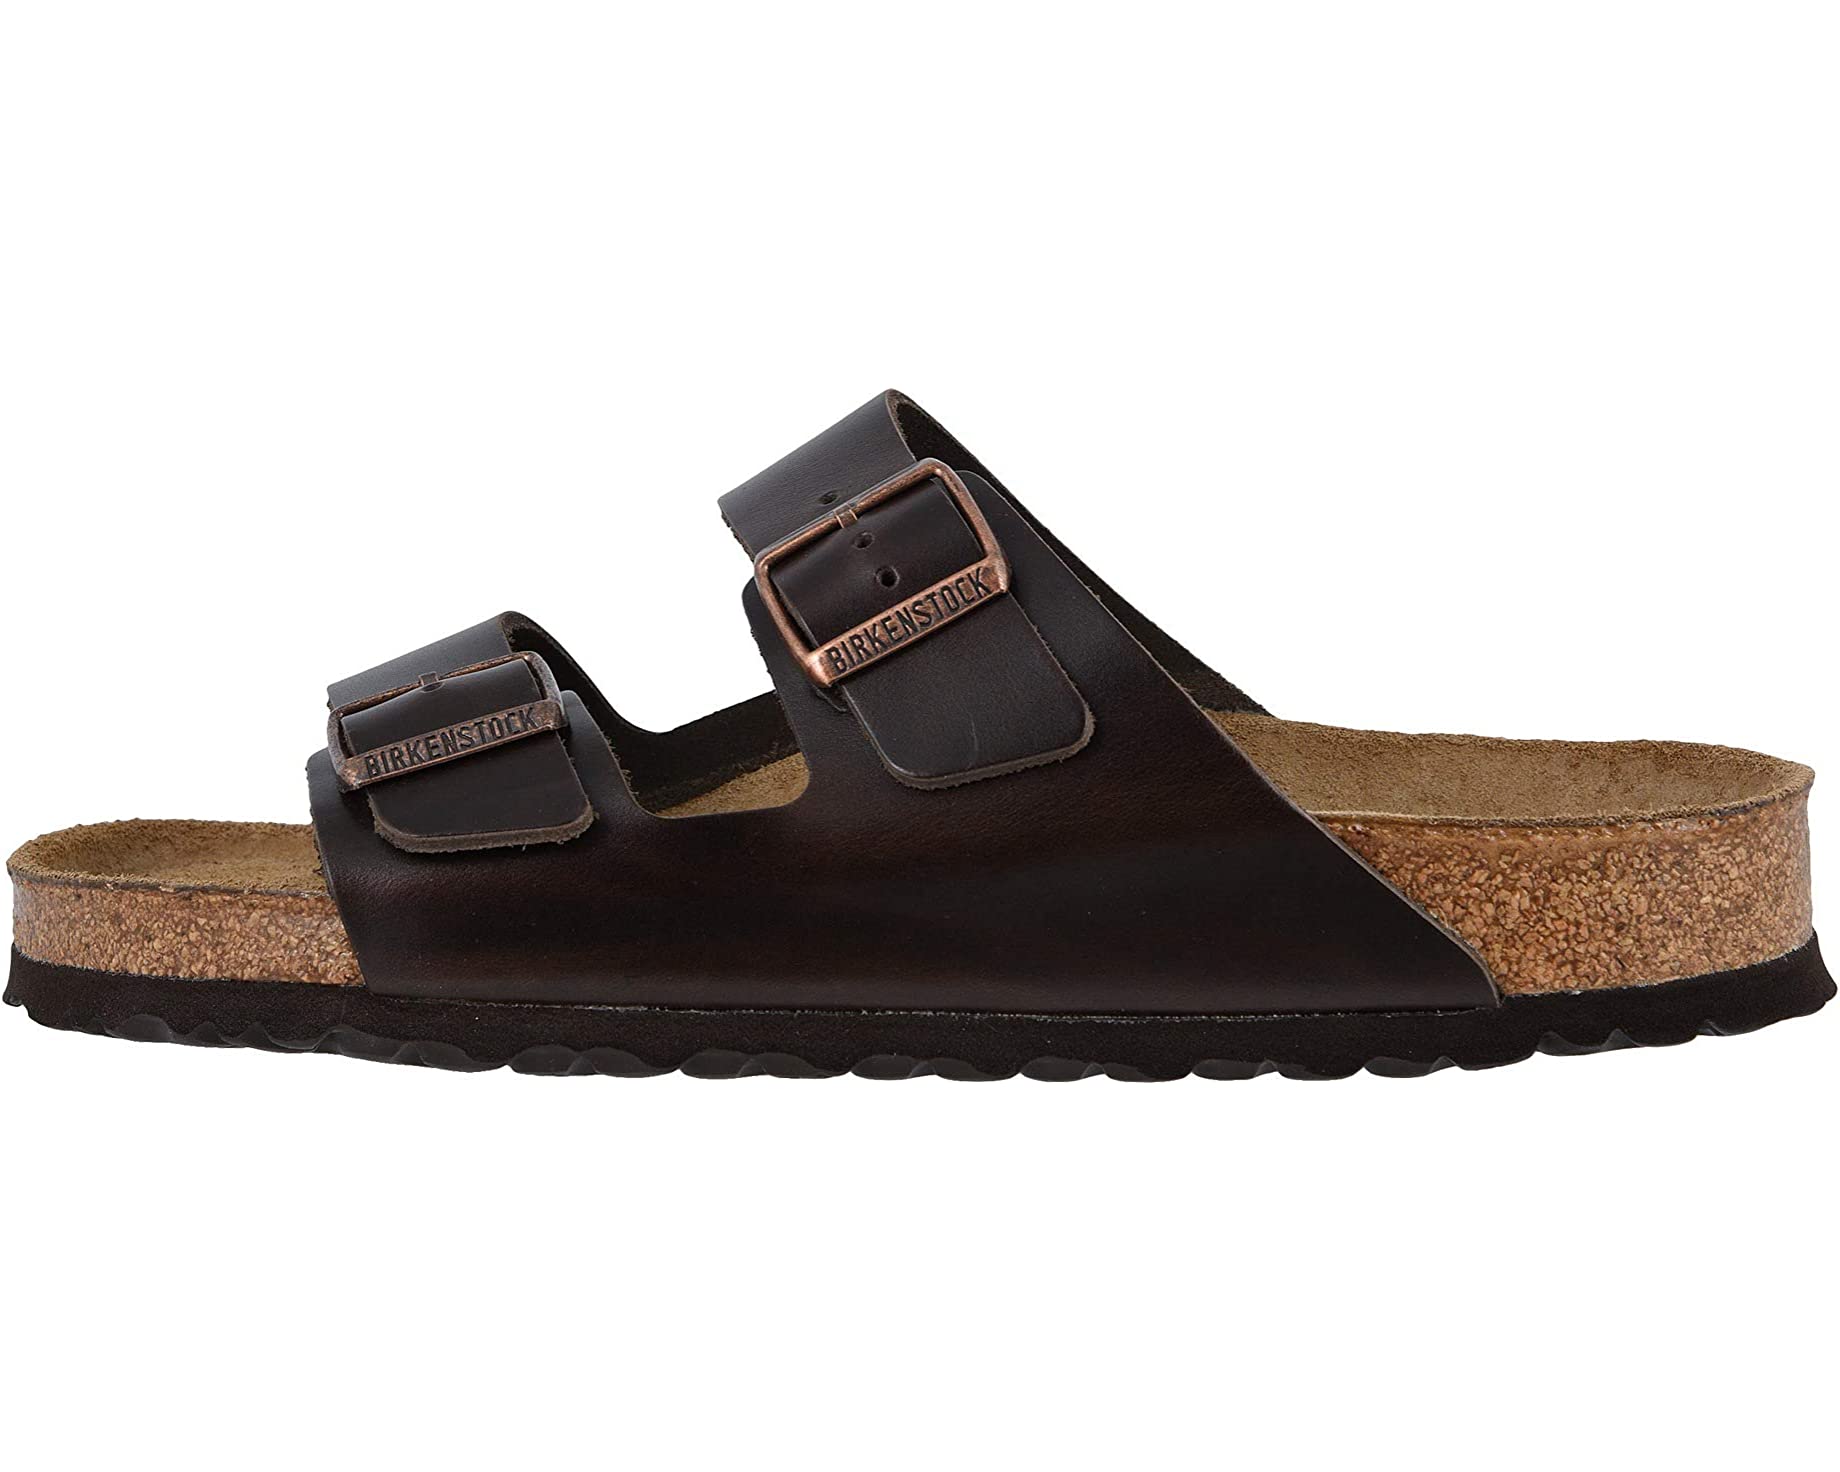 Сандалии Arizona Soft Footbed - Leather (Unisex) Birkenstock, коричневый цена и фото